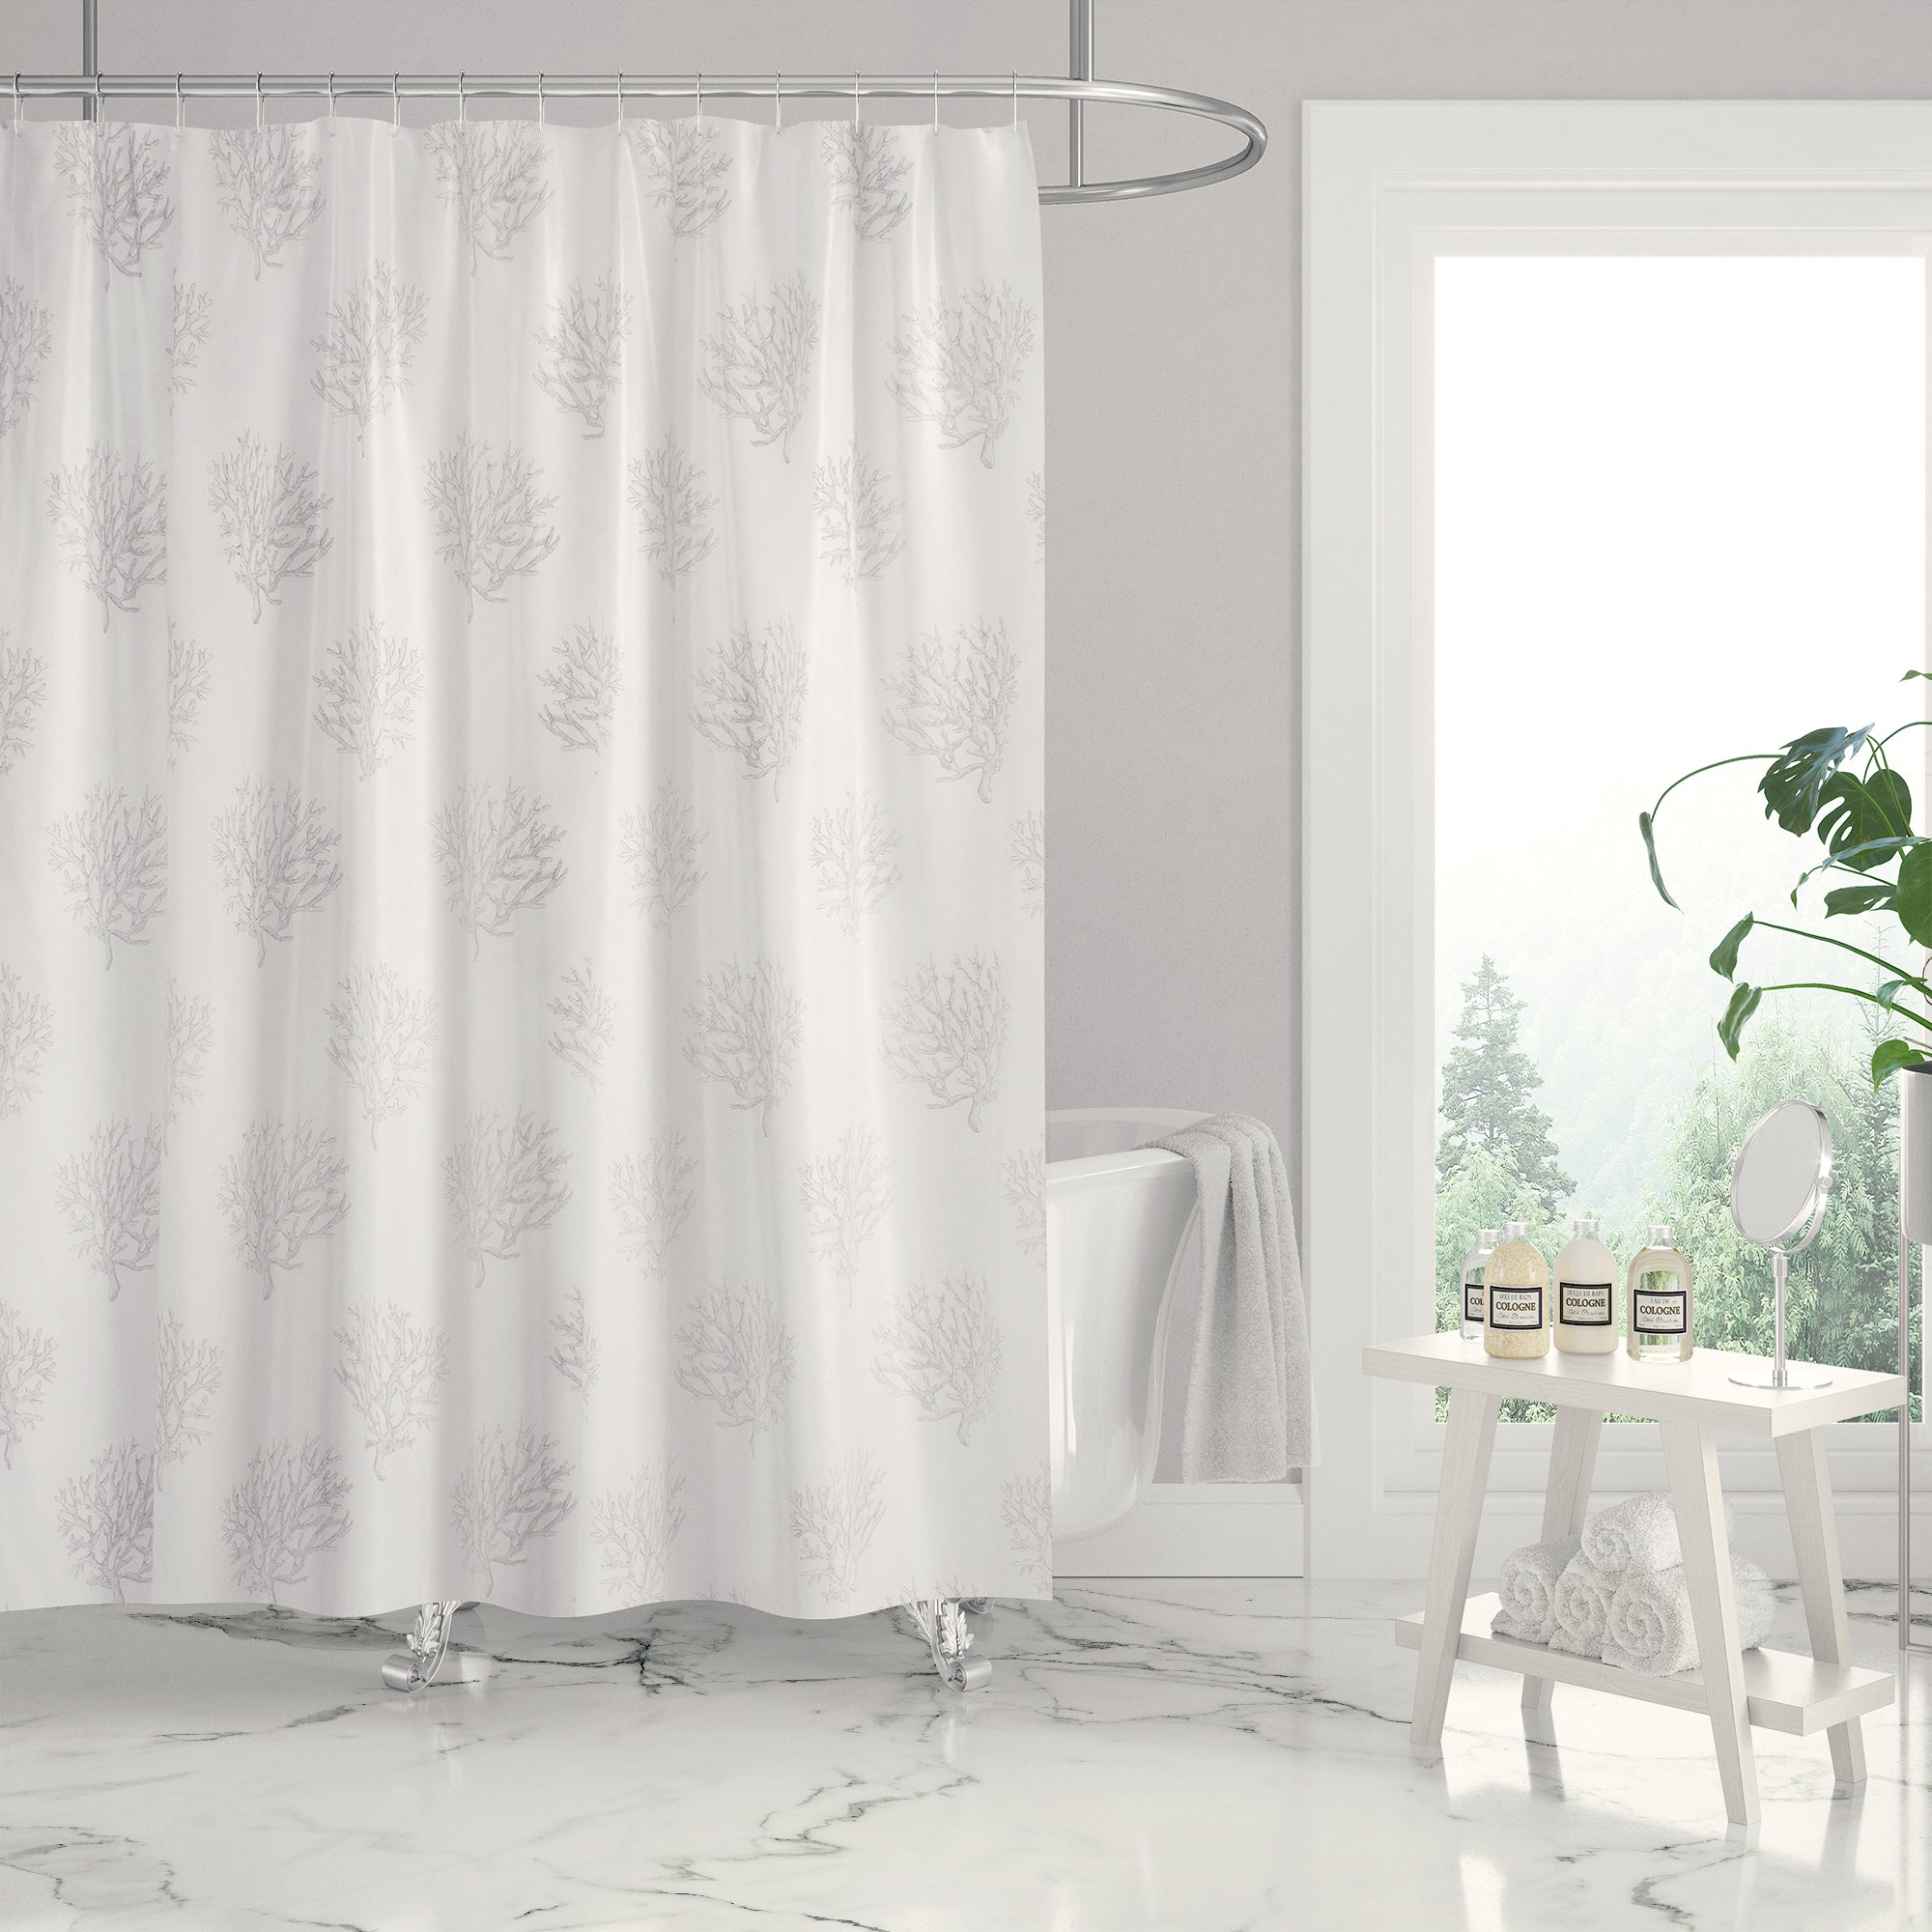 Nantucket Shower Curtain - back fabric